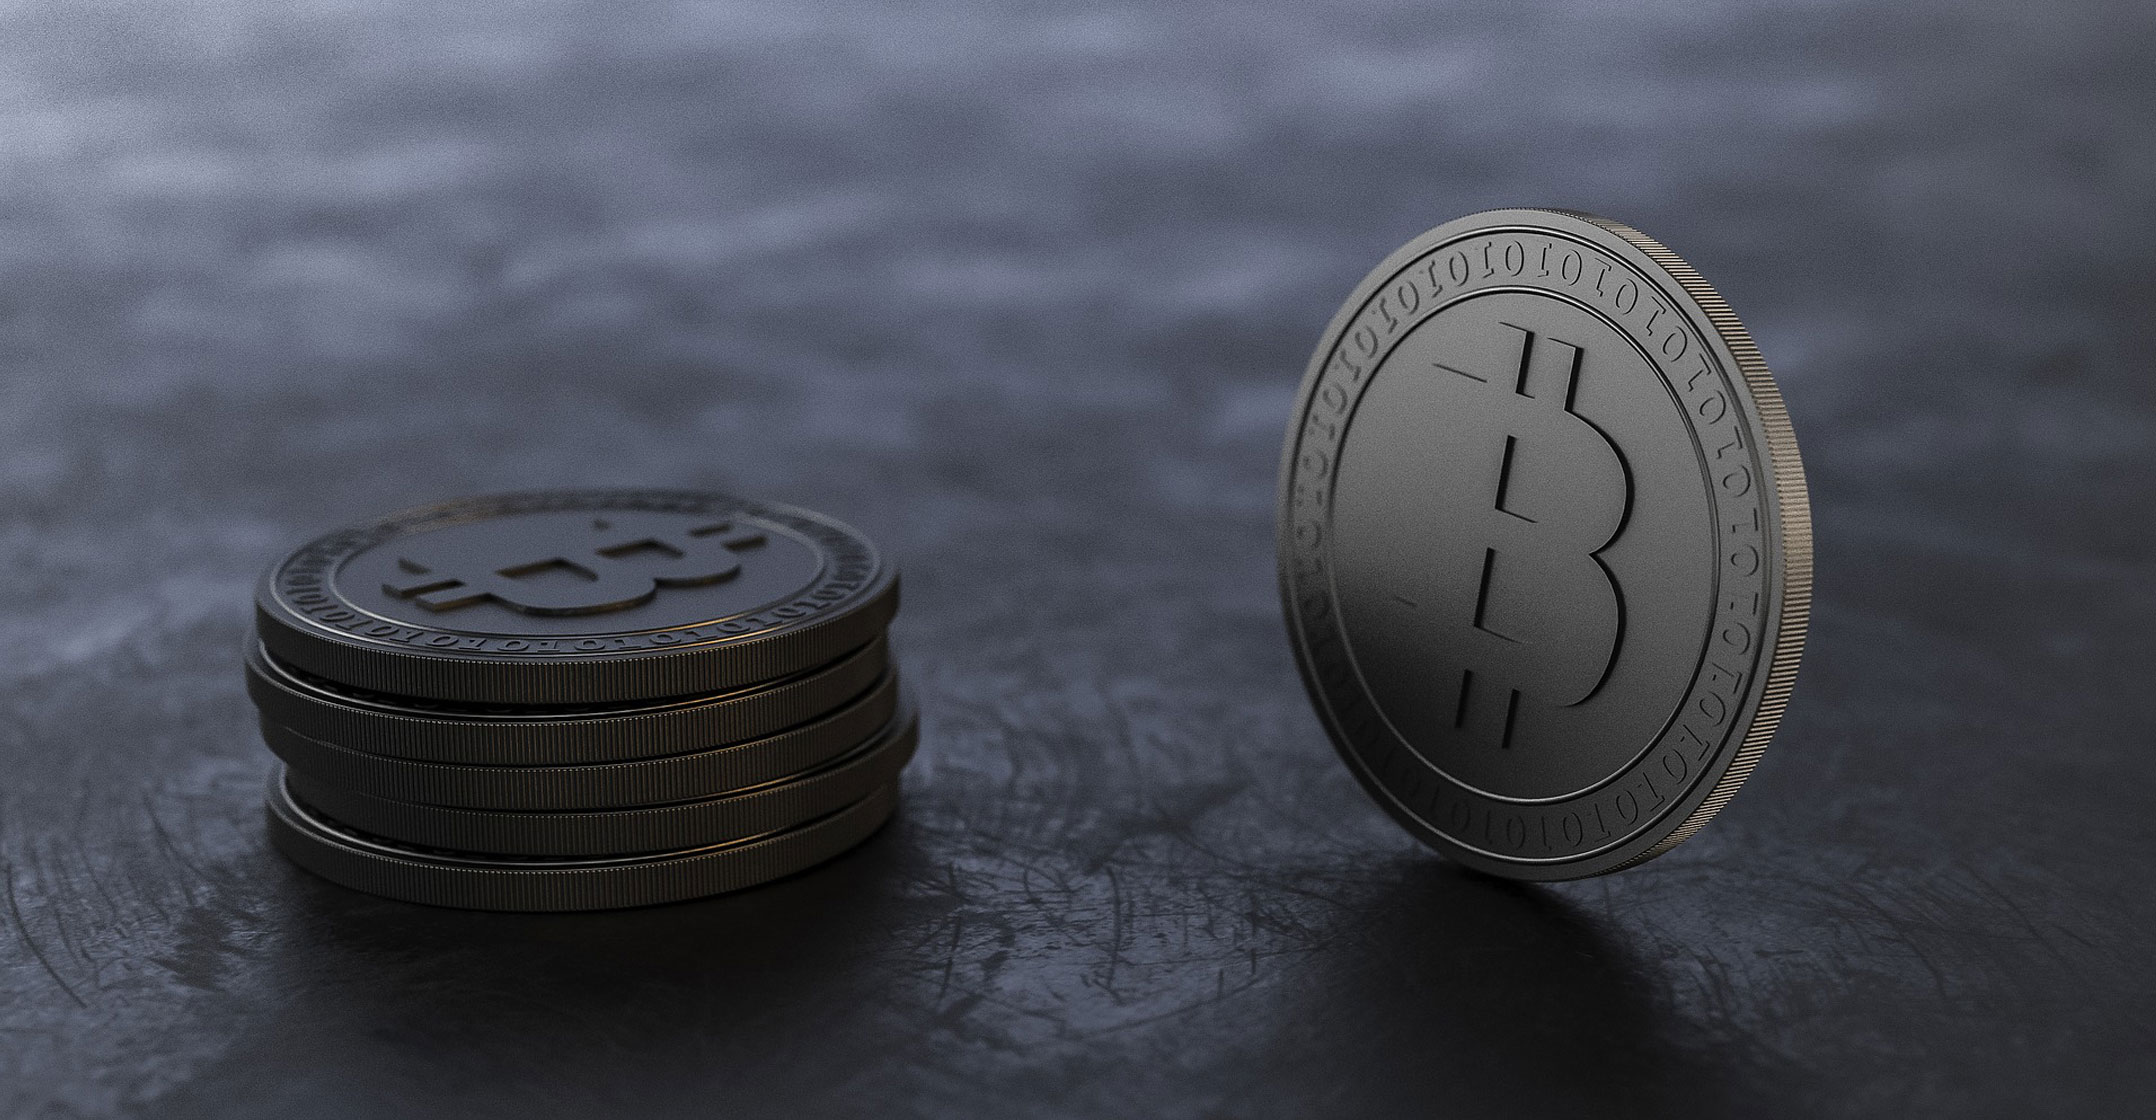 fnb bitcoin jae prekybos bitcoins